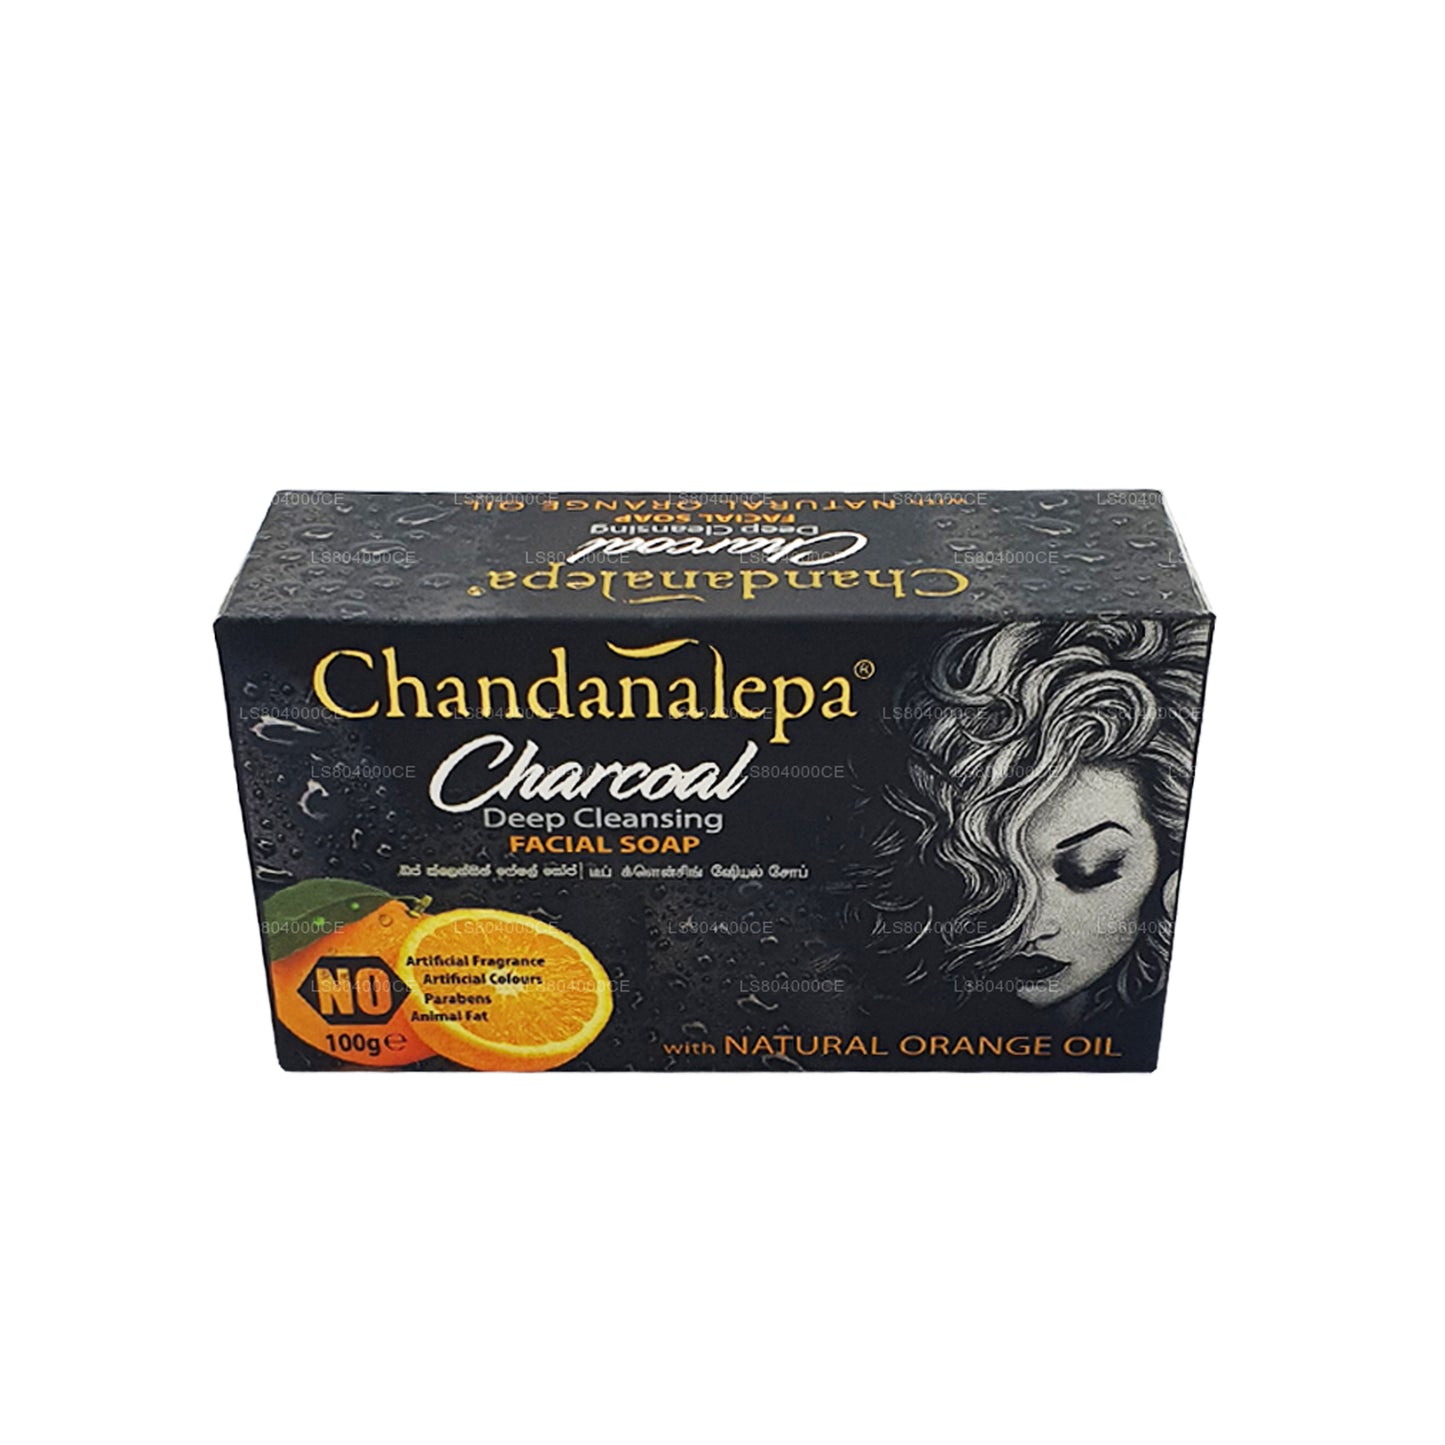 Chandanalepa 活性炭深层清洁棒 (100g)